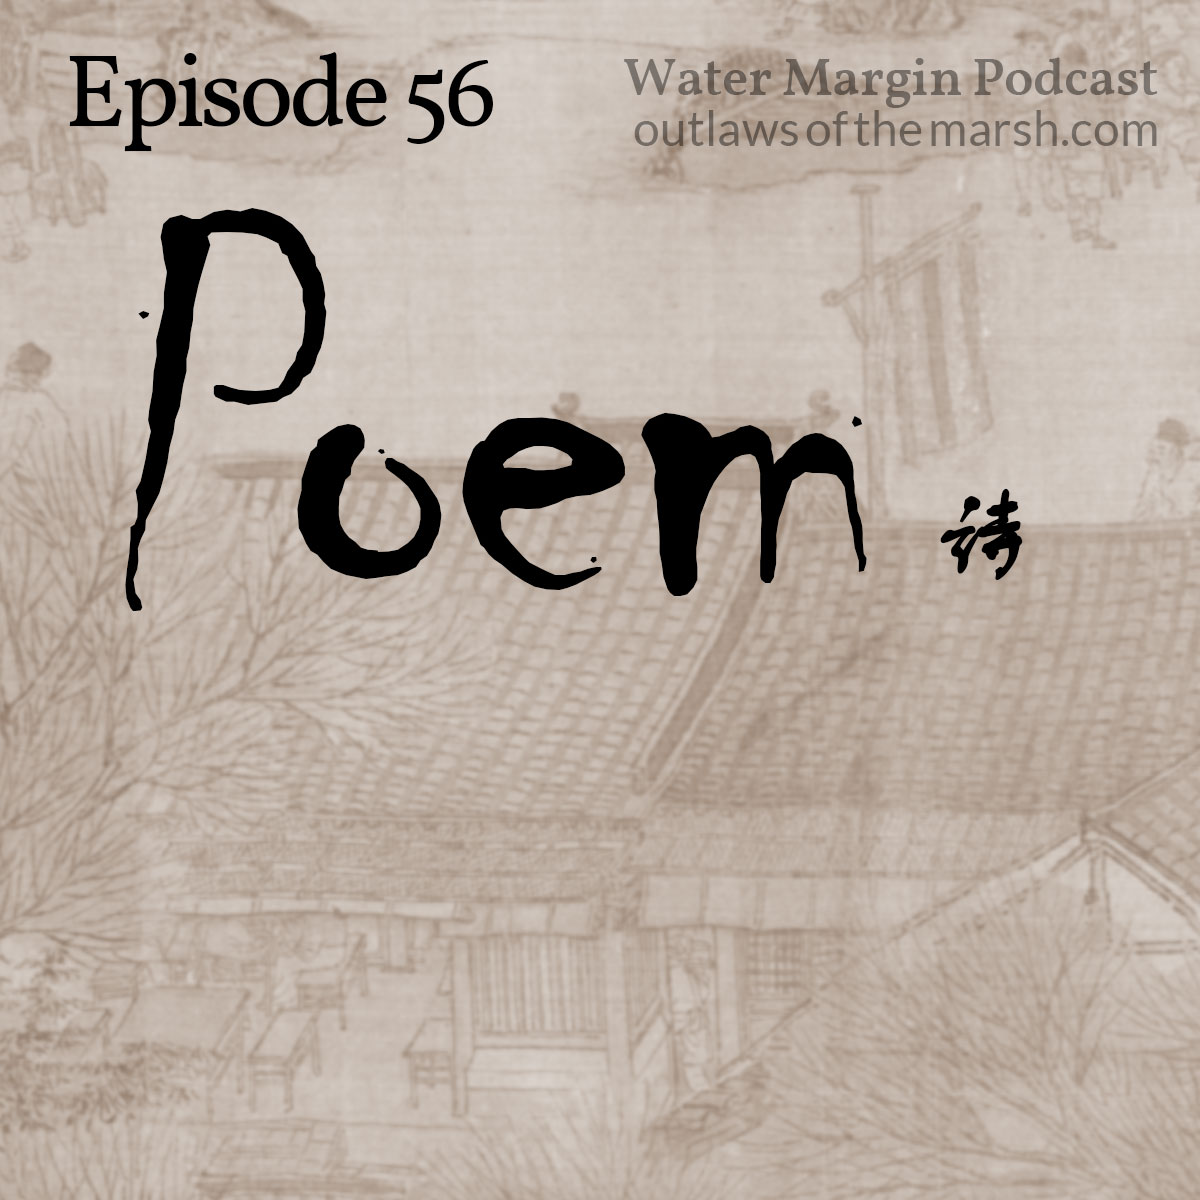 Water Margin Podcast: Episode 056